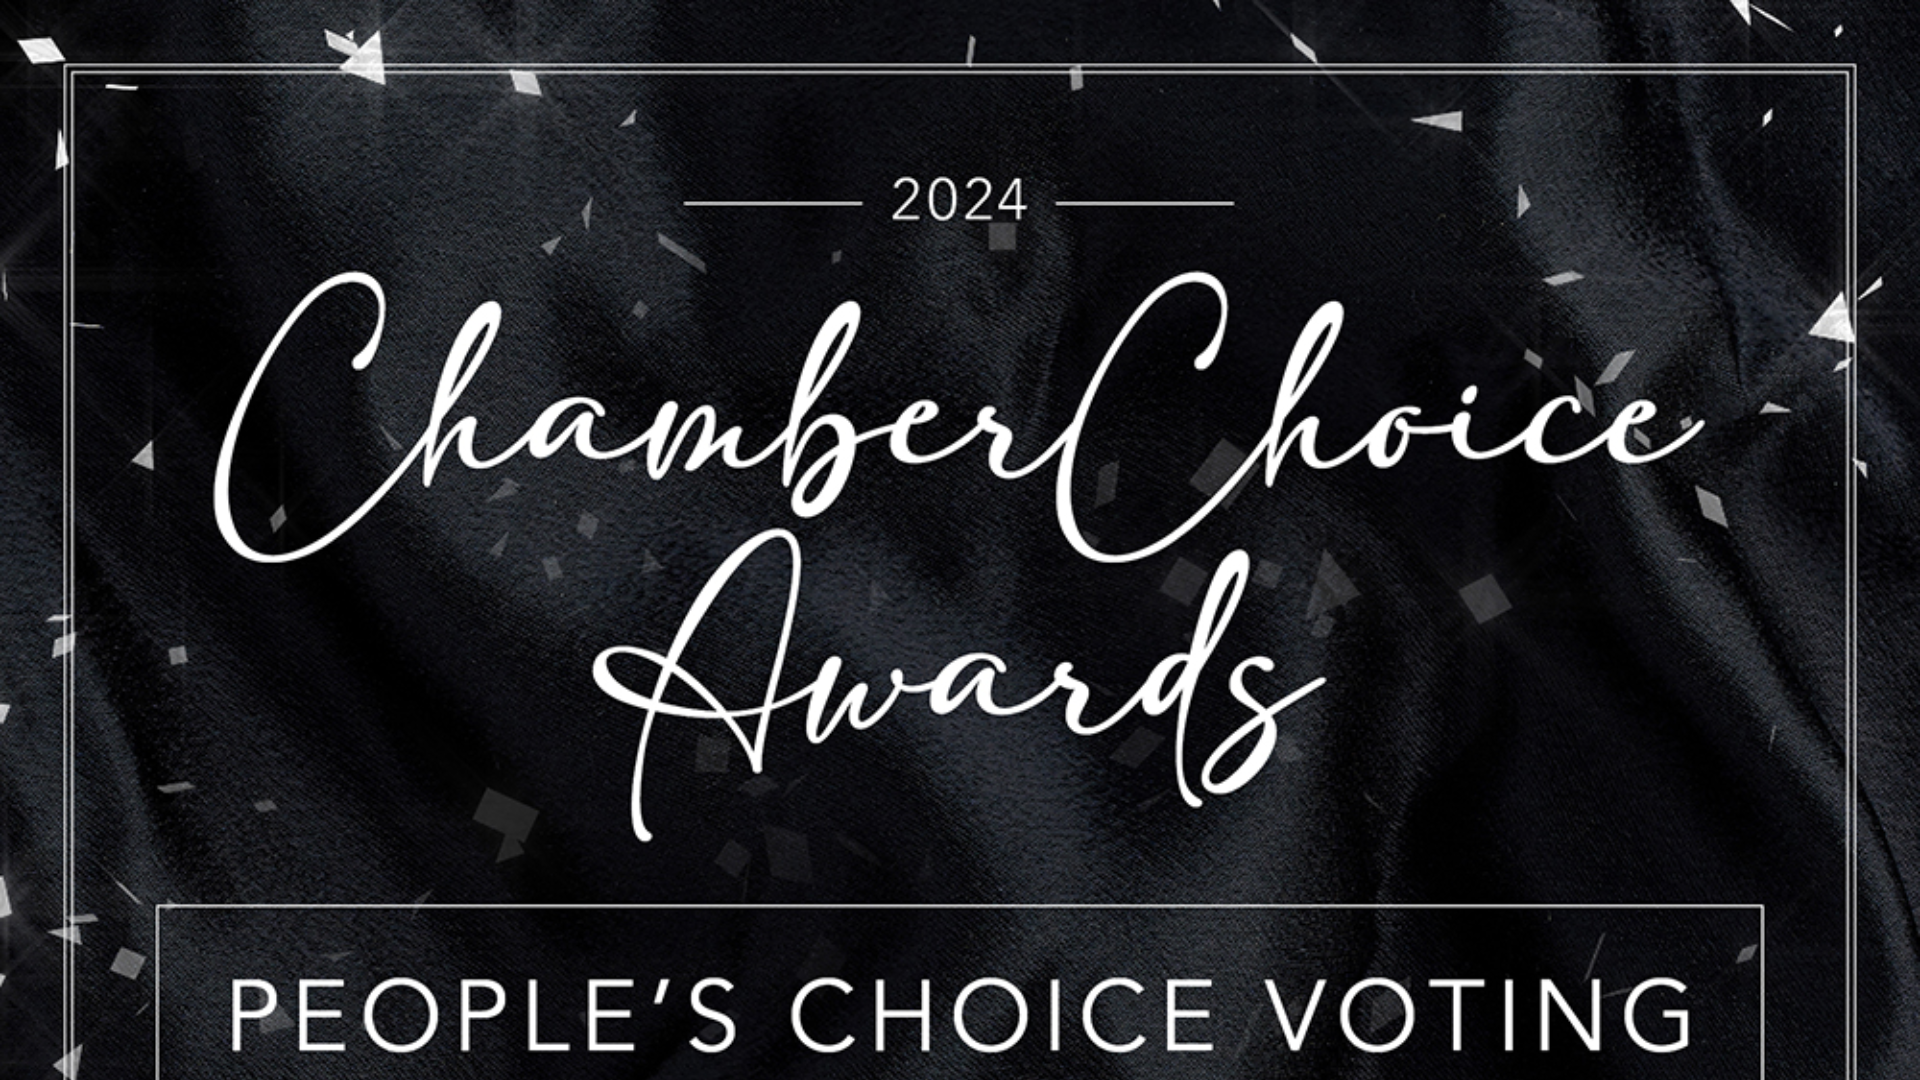 ChamberChoice Awards Peapl'es Choice Award